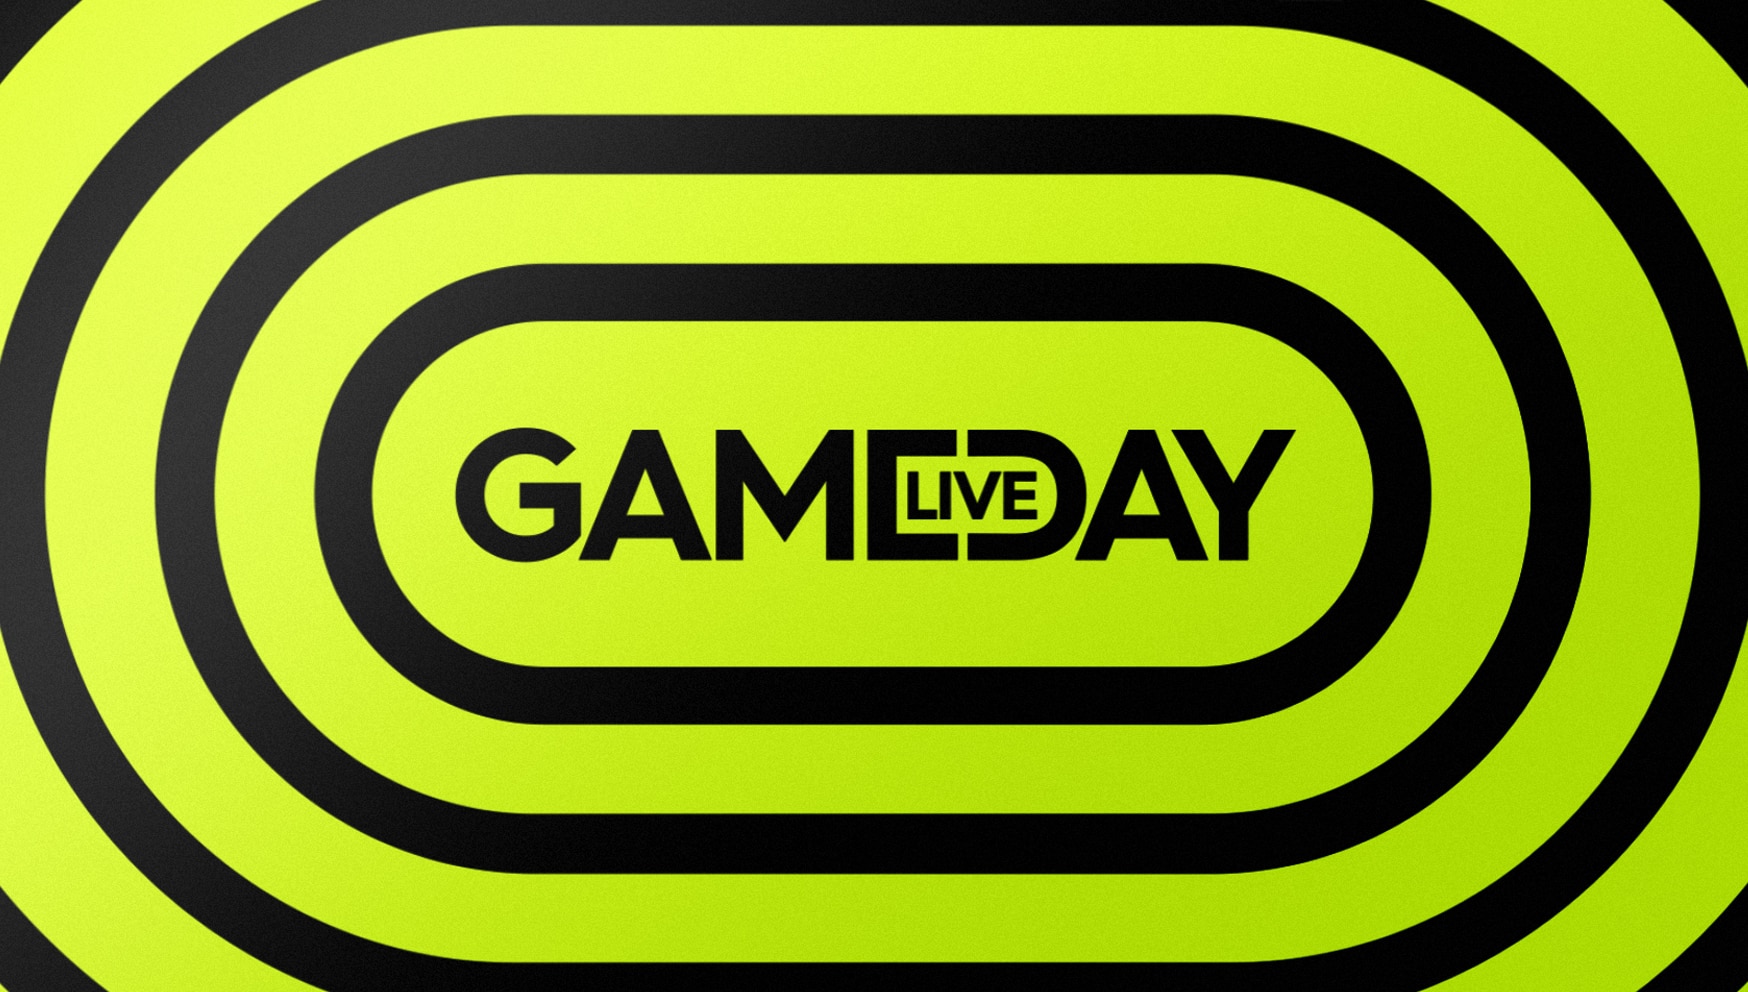 Gameday Live